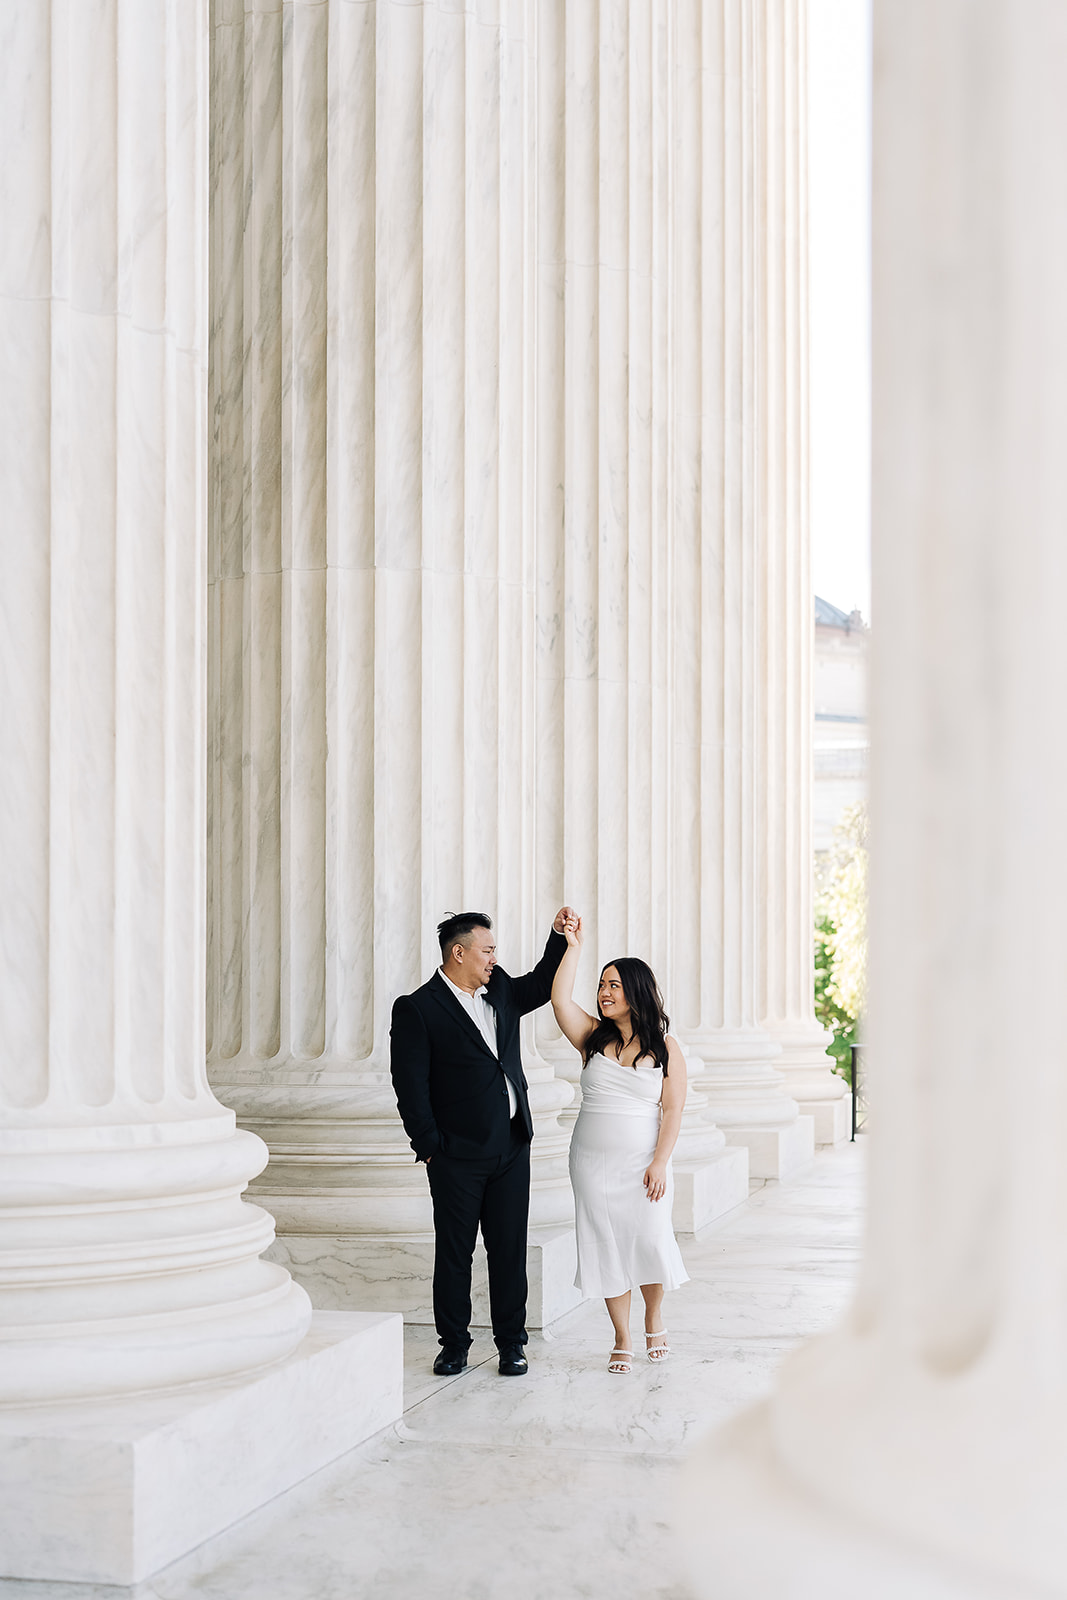 Supreme court engagement photoshoot